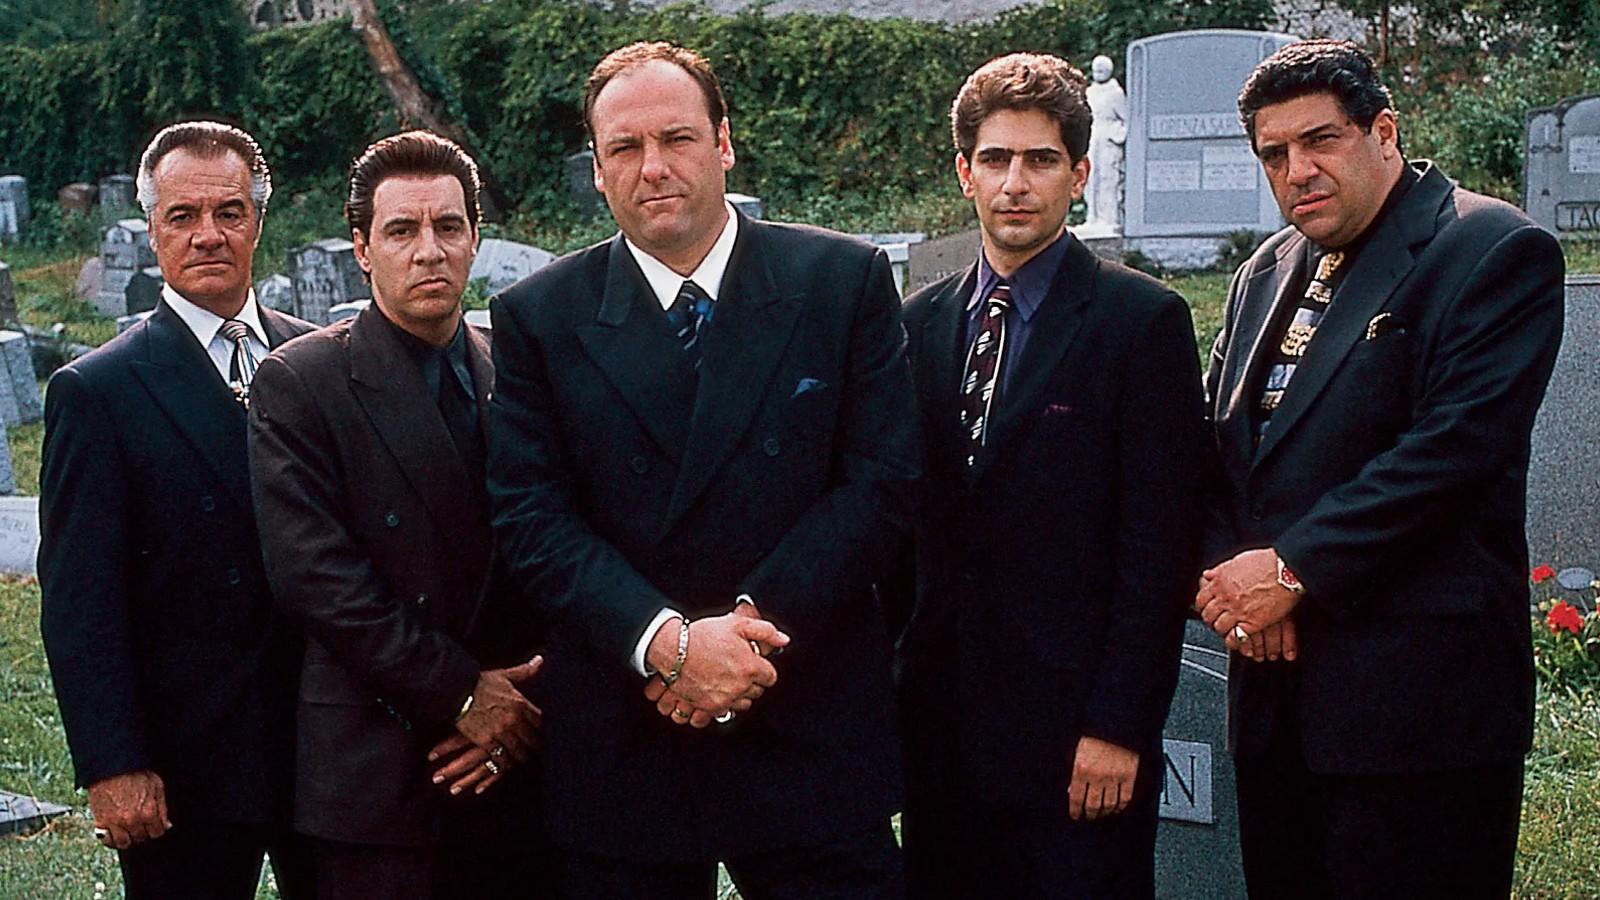 The main men in The Sopranos.